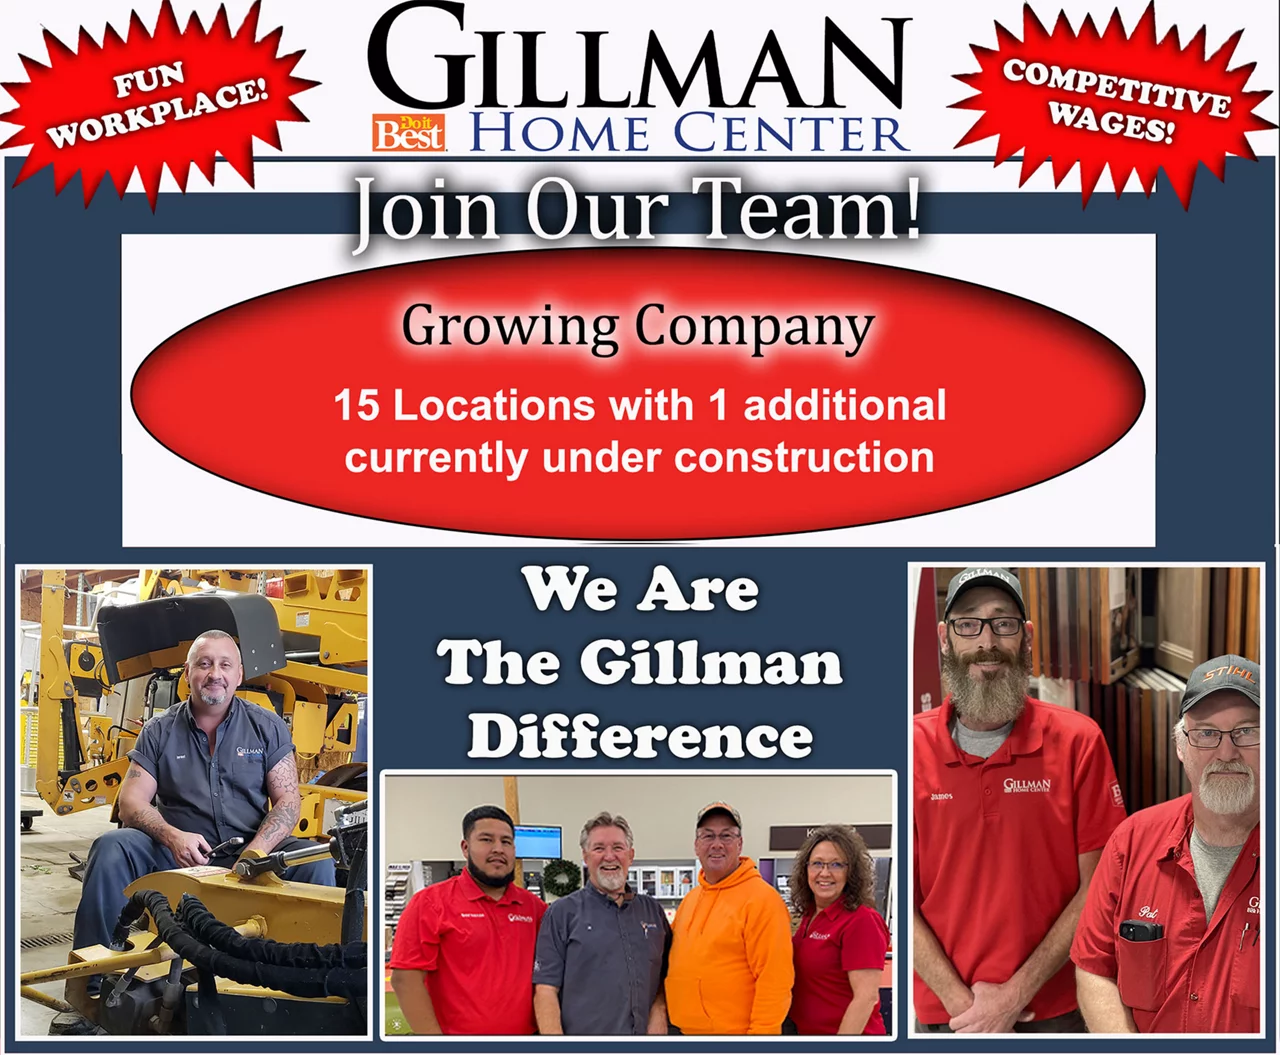 Gillman Home Center Employment